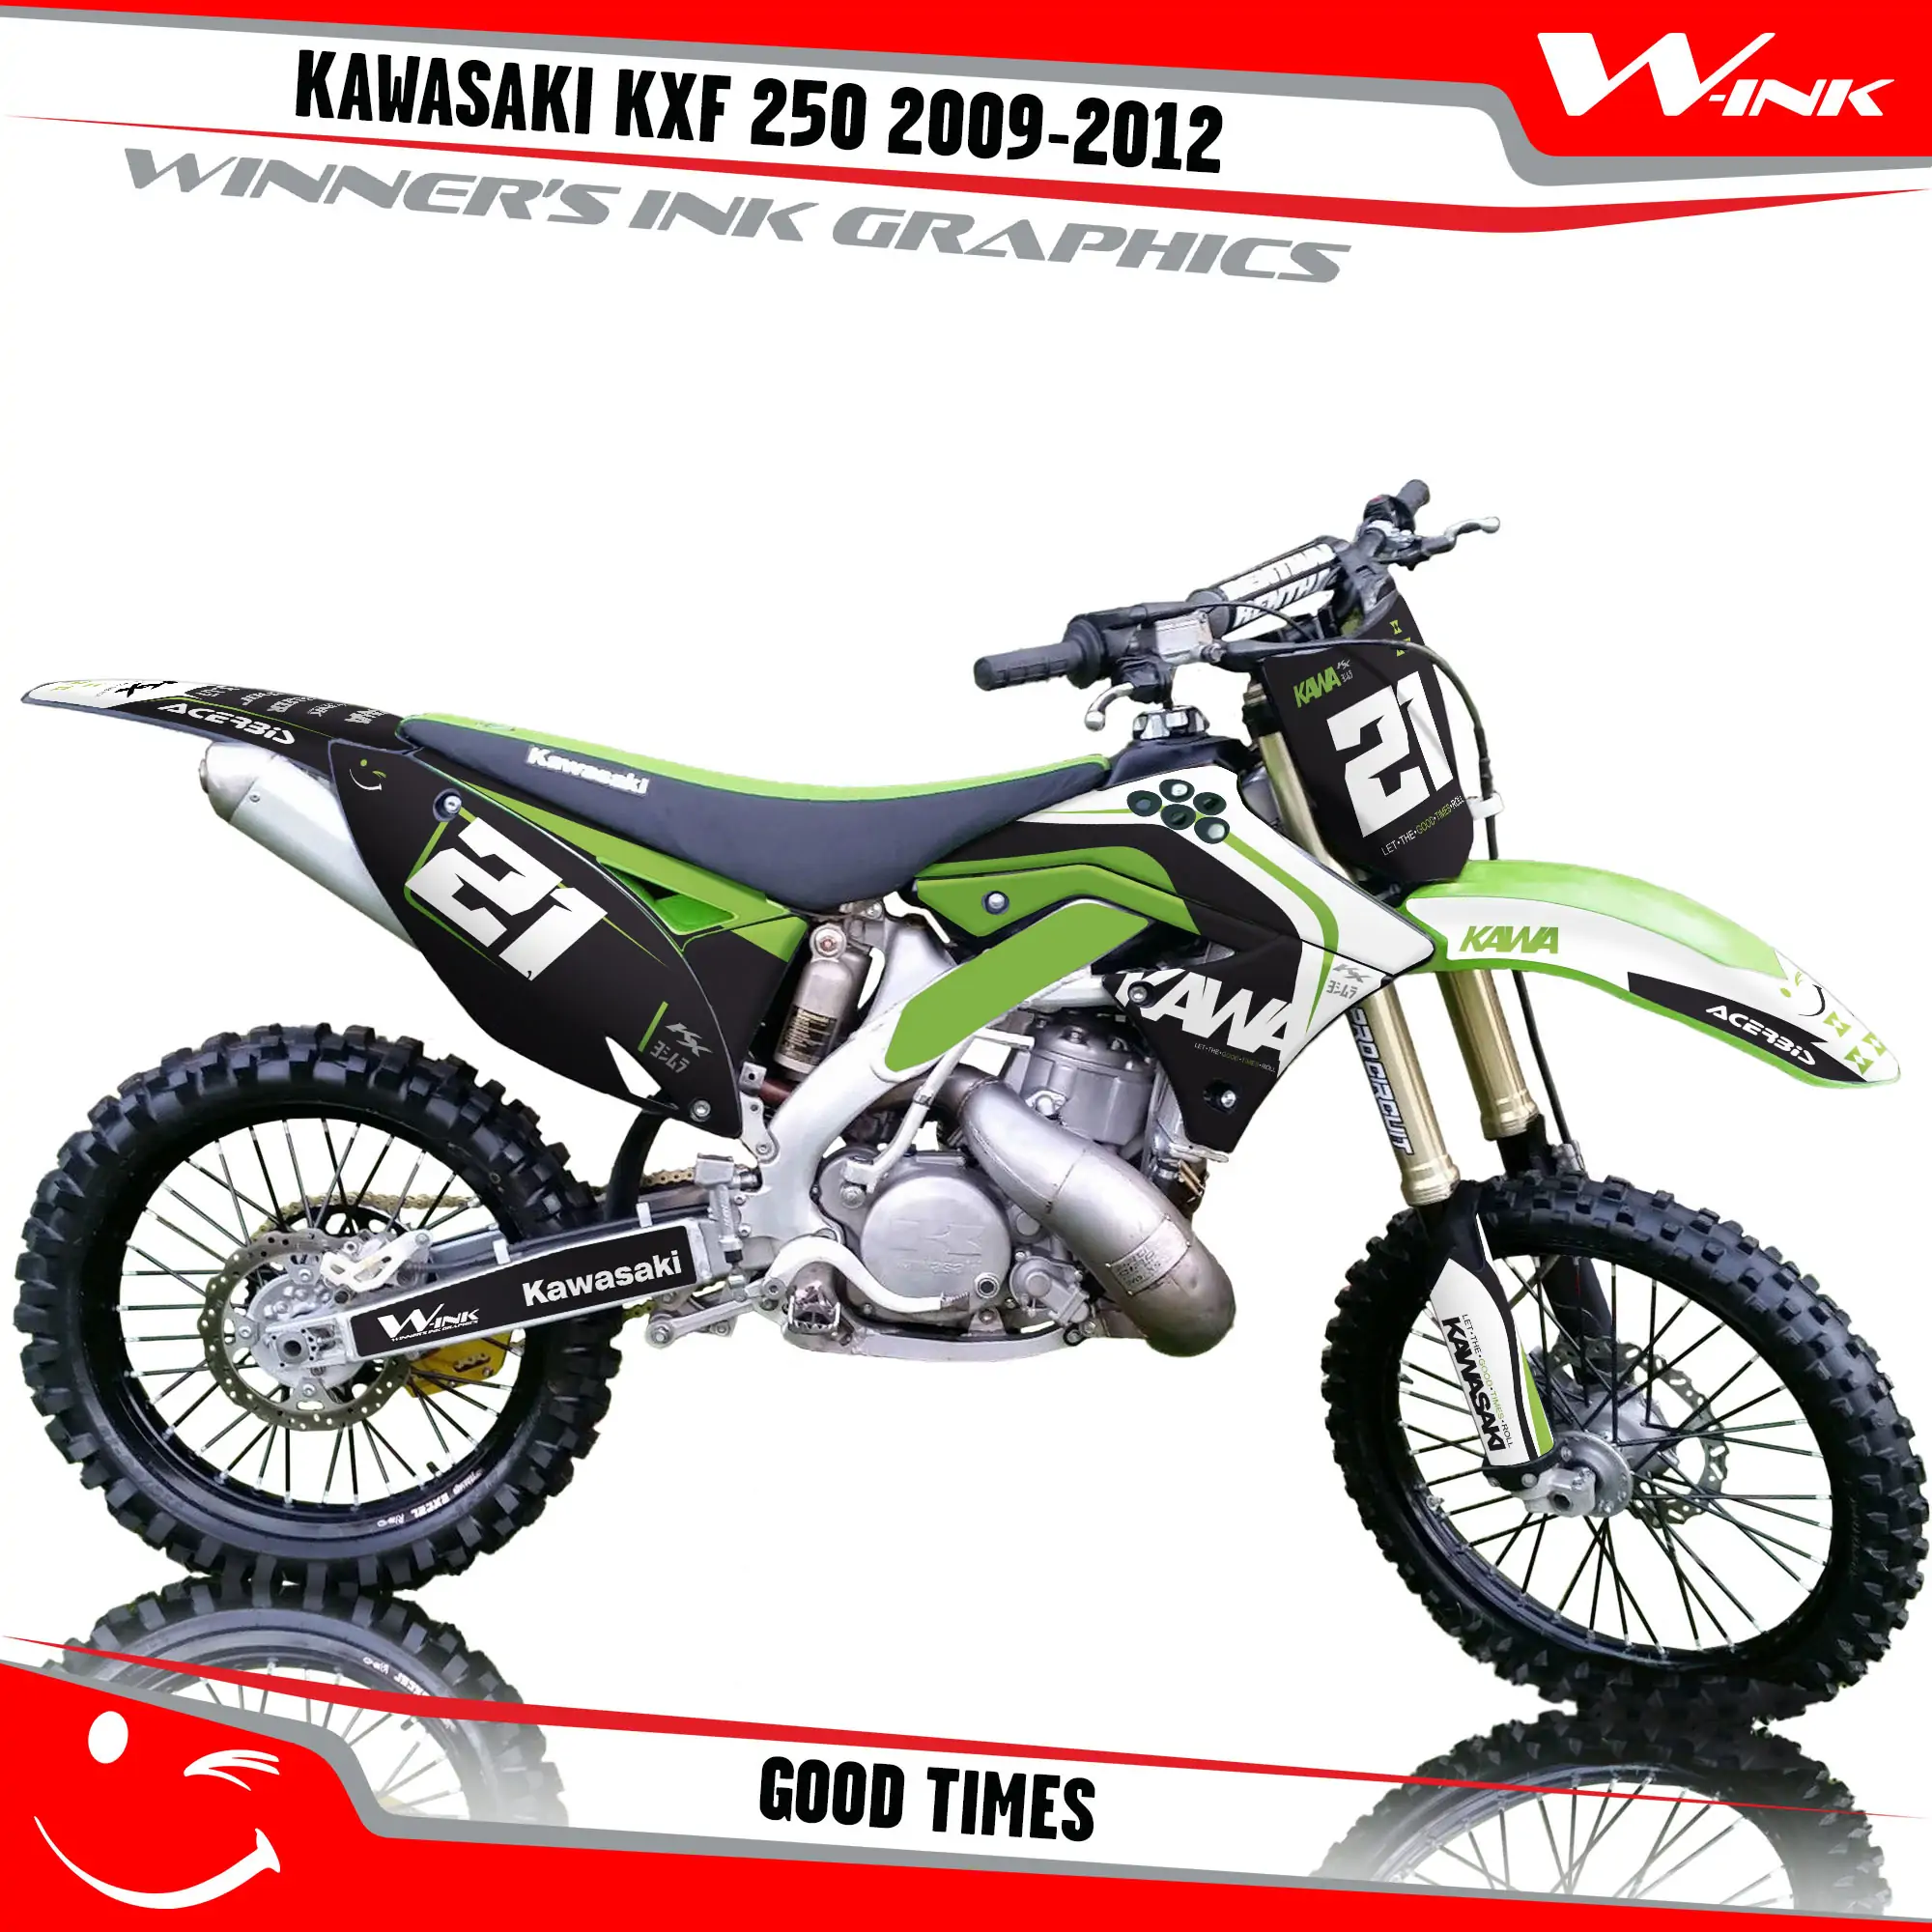 Buy decals Kawasaki KXF 250 2009-2012 Good Times